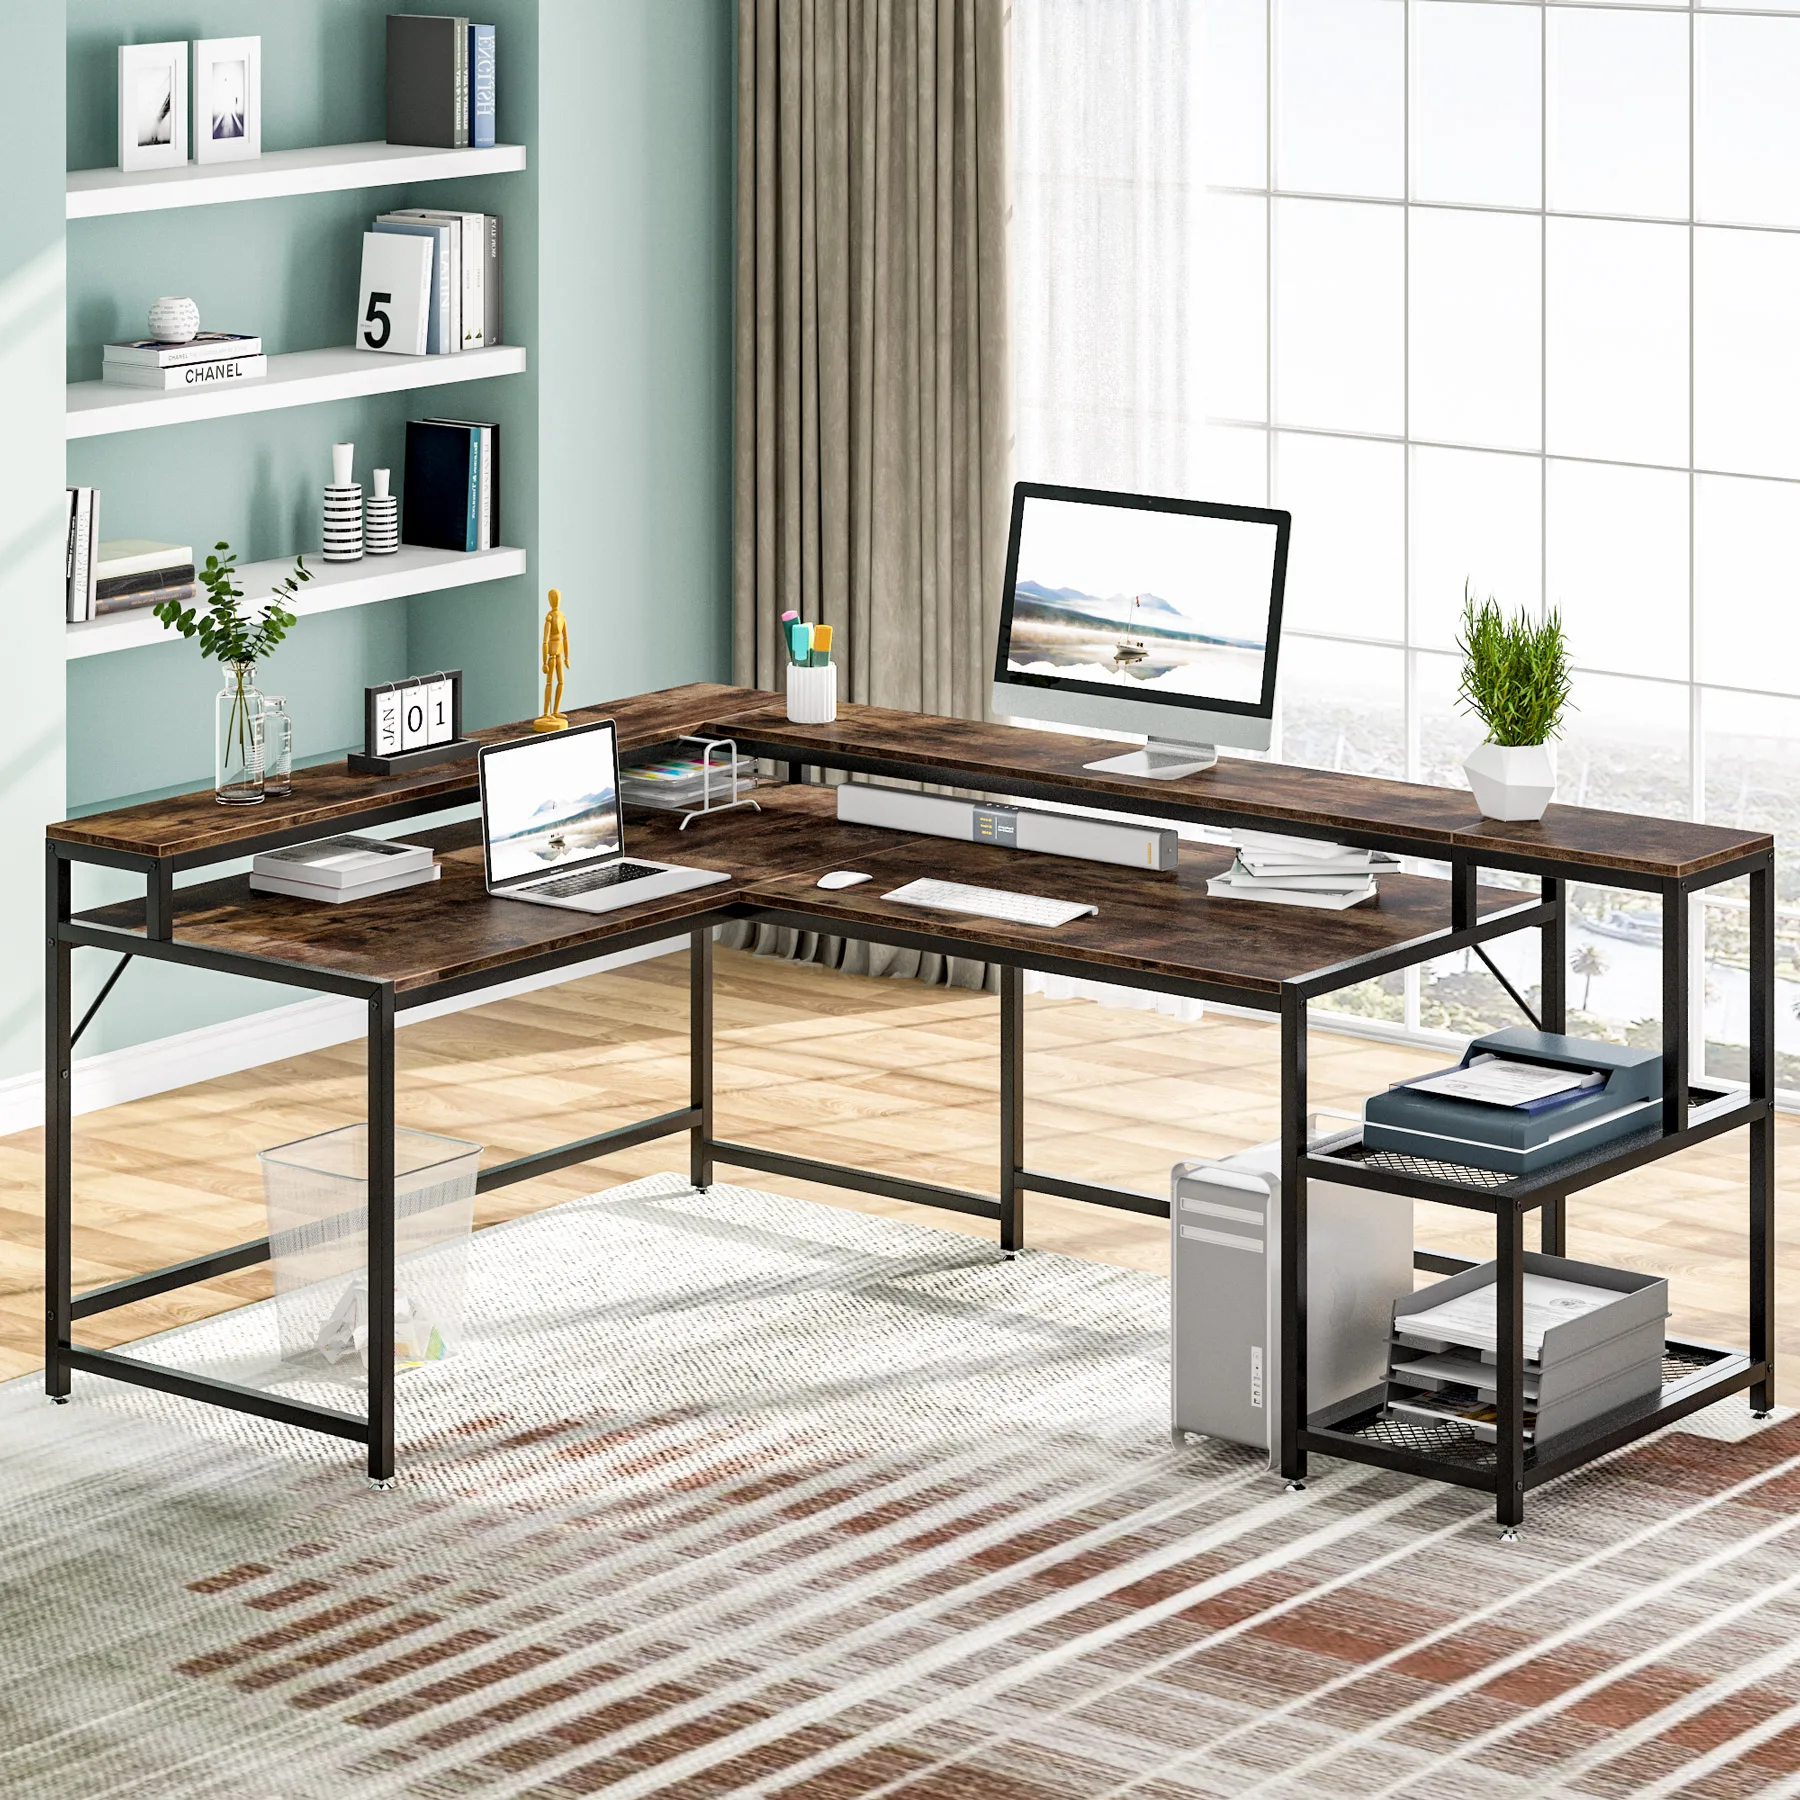 New Desk Table Home Large Corner Studio Office Computer Desk Table Design For Home